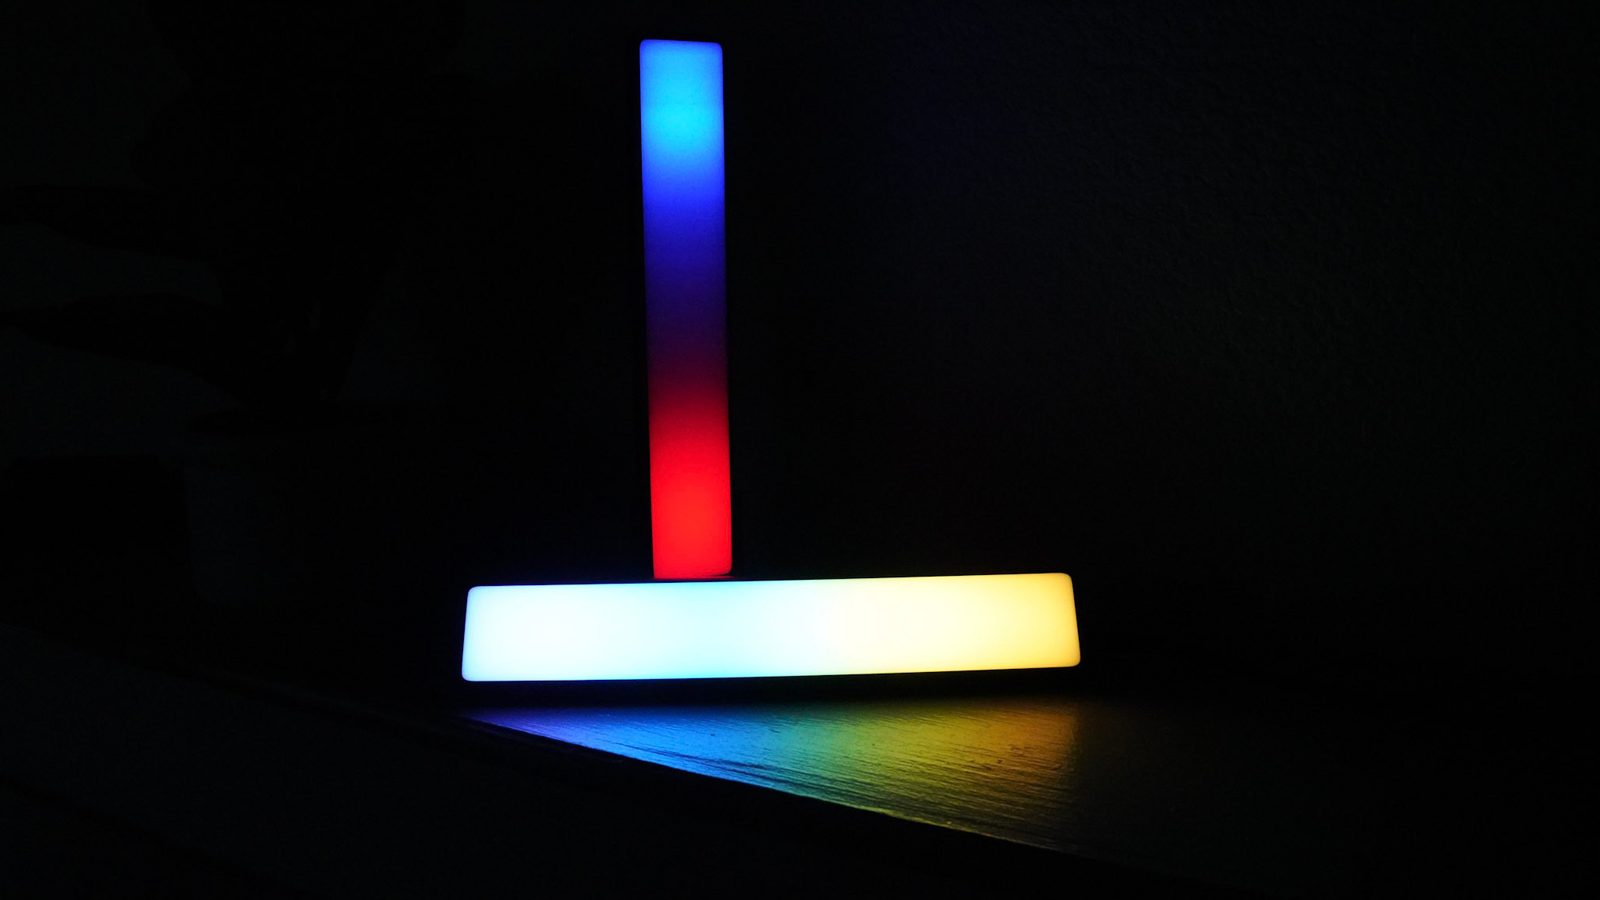 Govee Flow Plus light bars in dark room in segmented rainbow mode